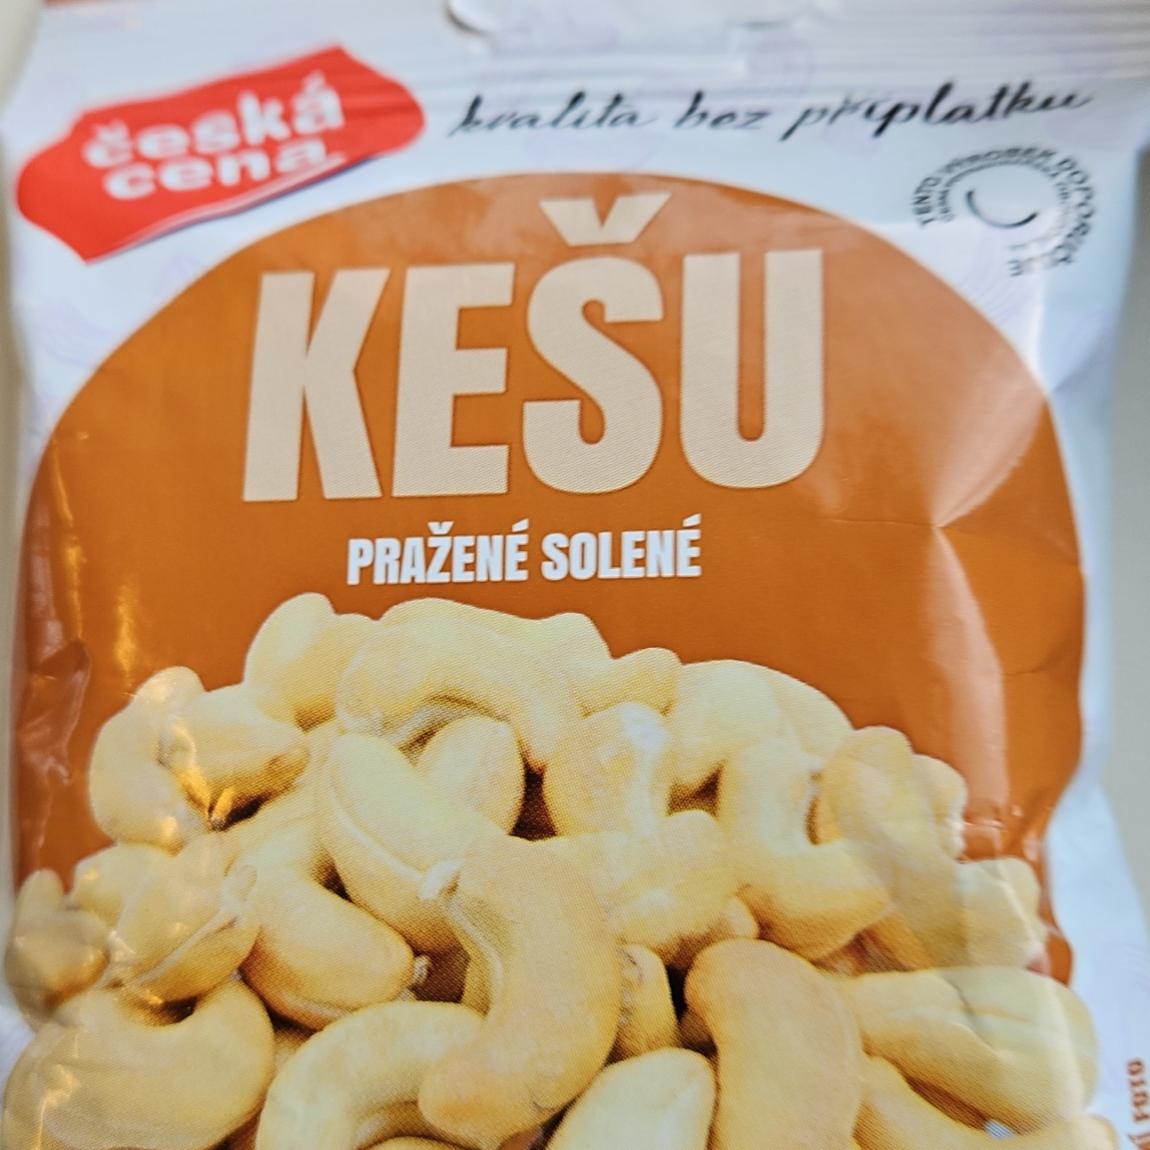 Fotografie - Kešu pražené, solené Česká cena